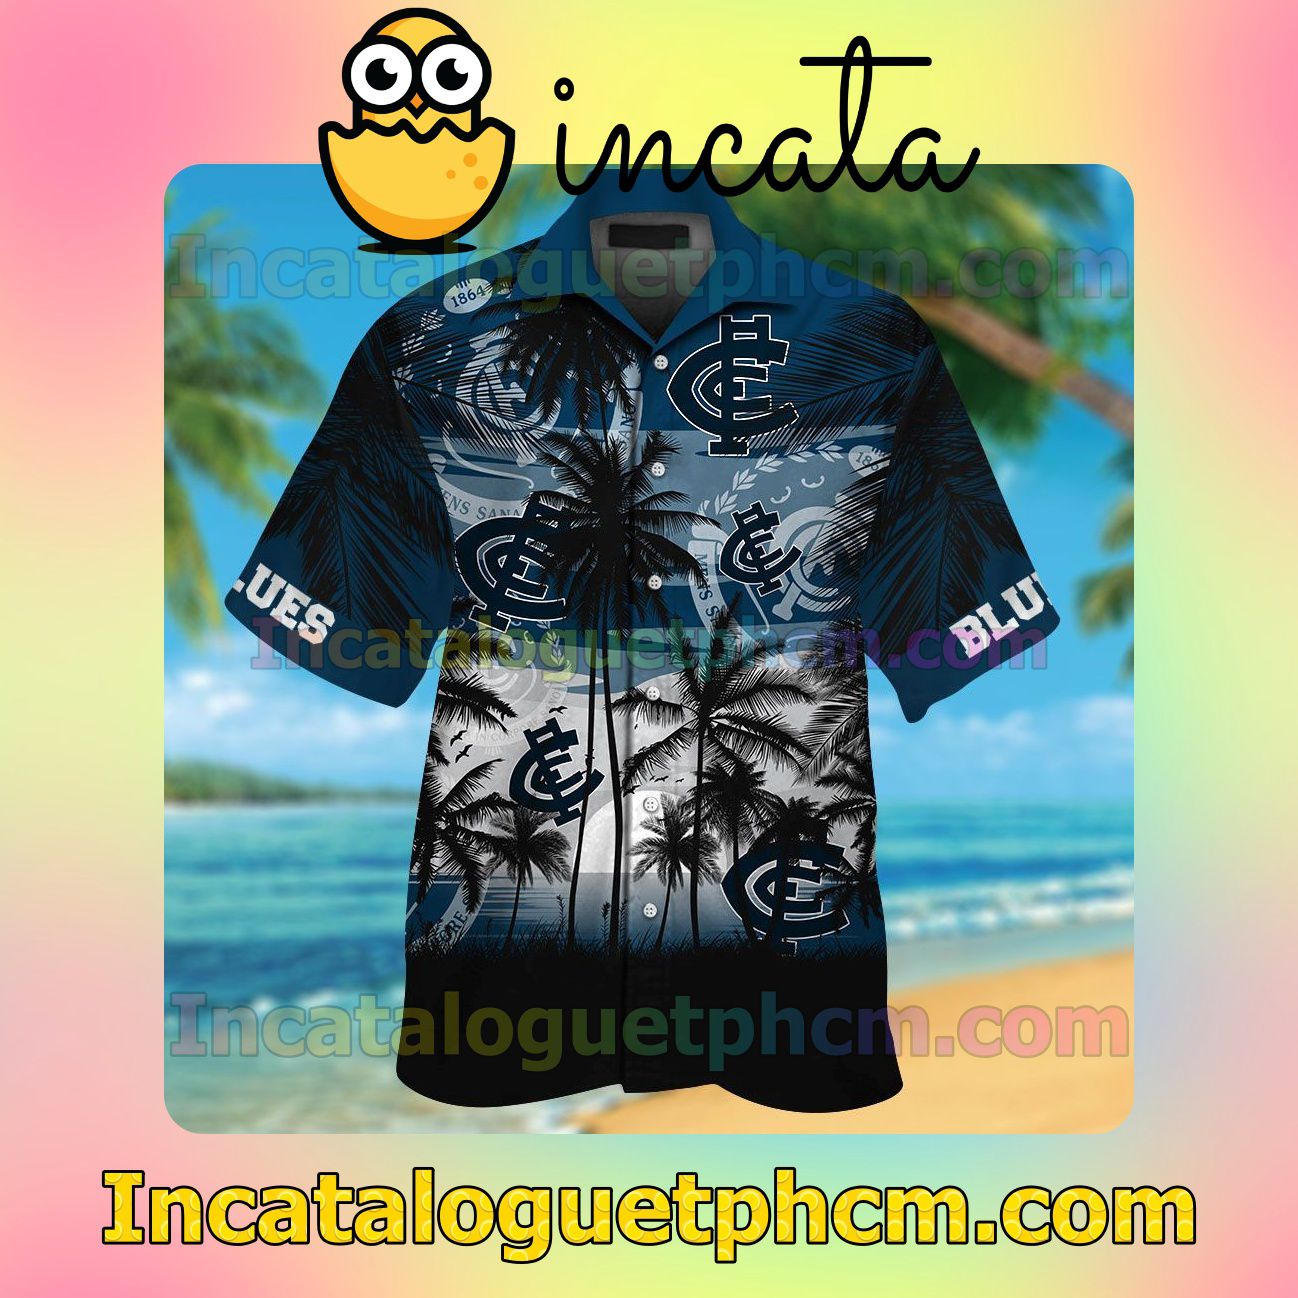 Carlton Blues Beach Vacation Shirt, Swim Shorts